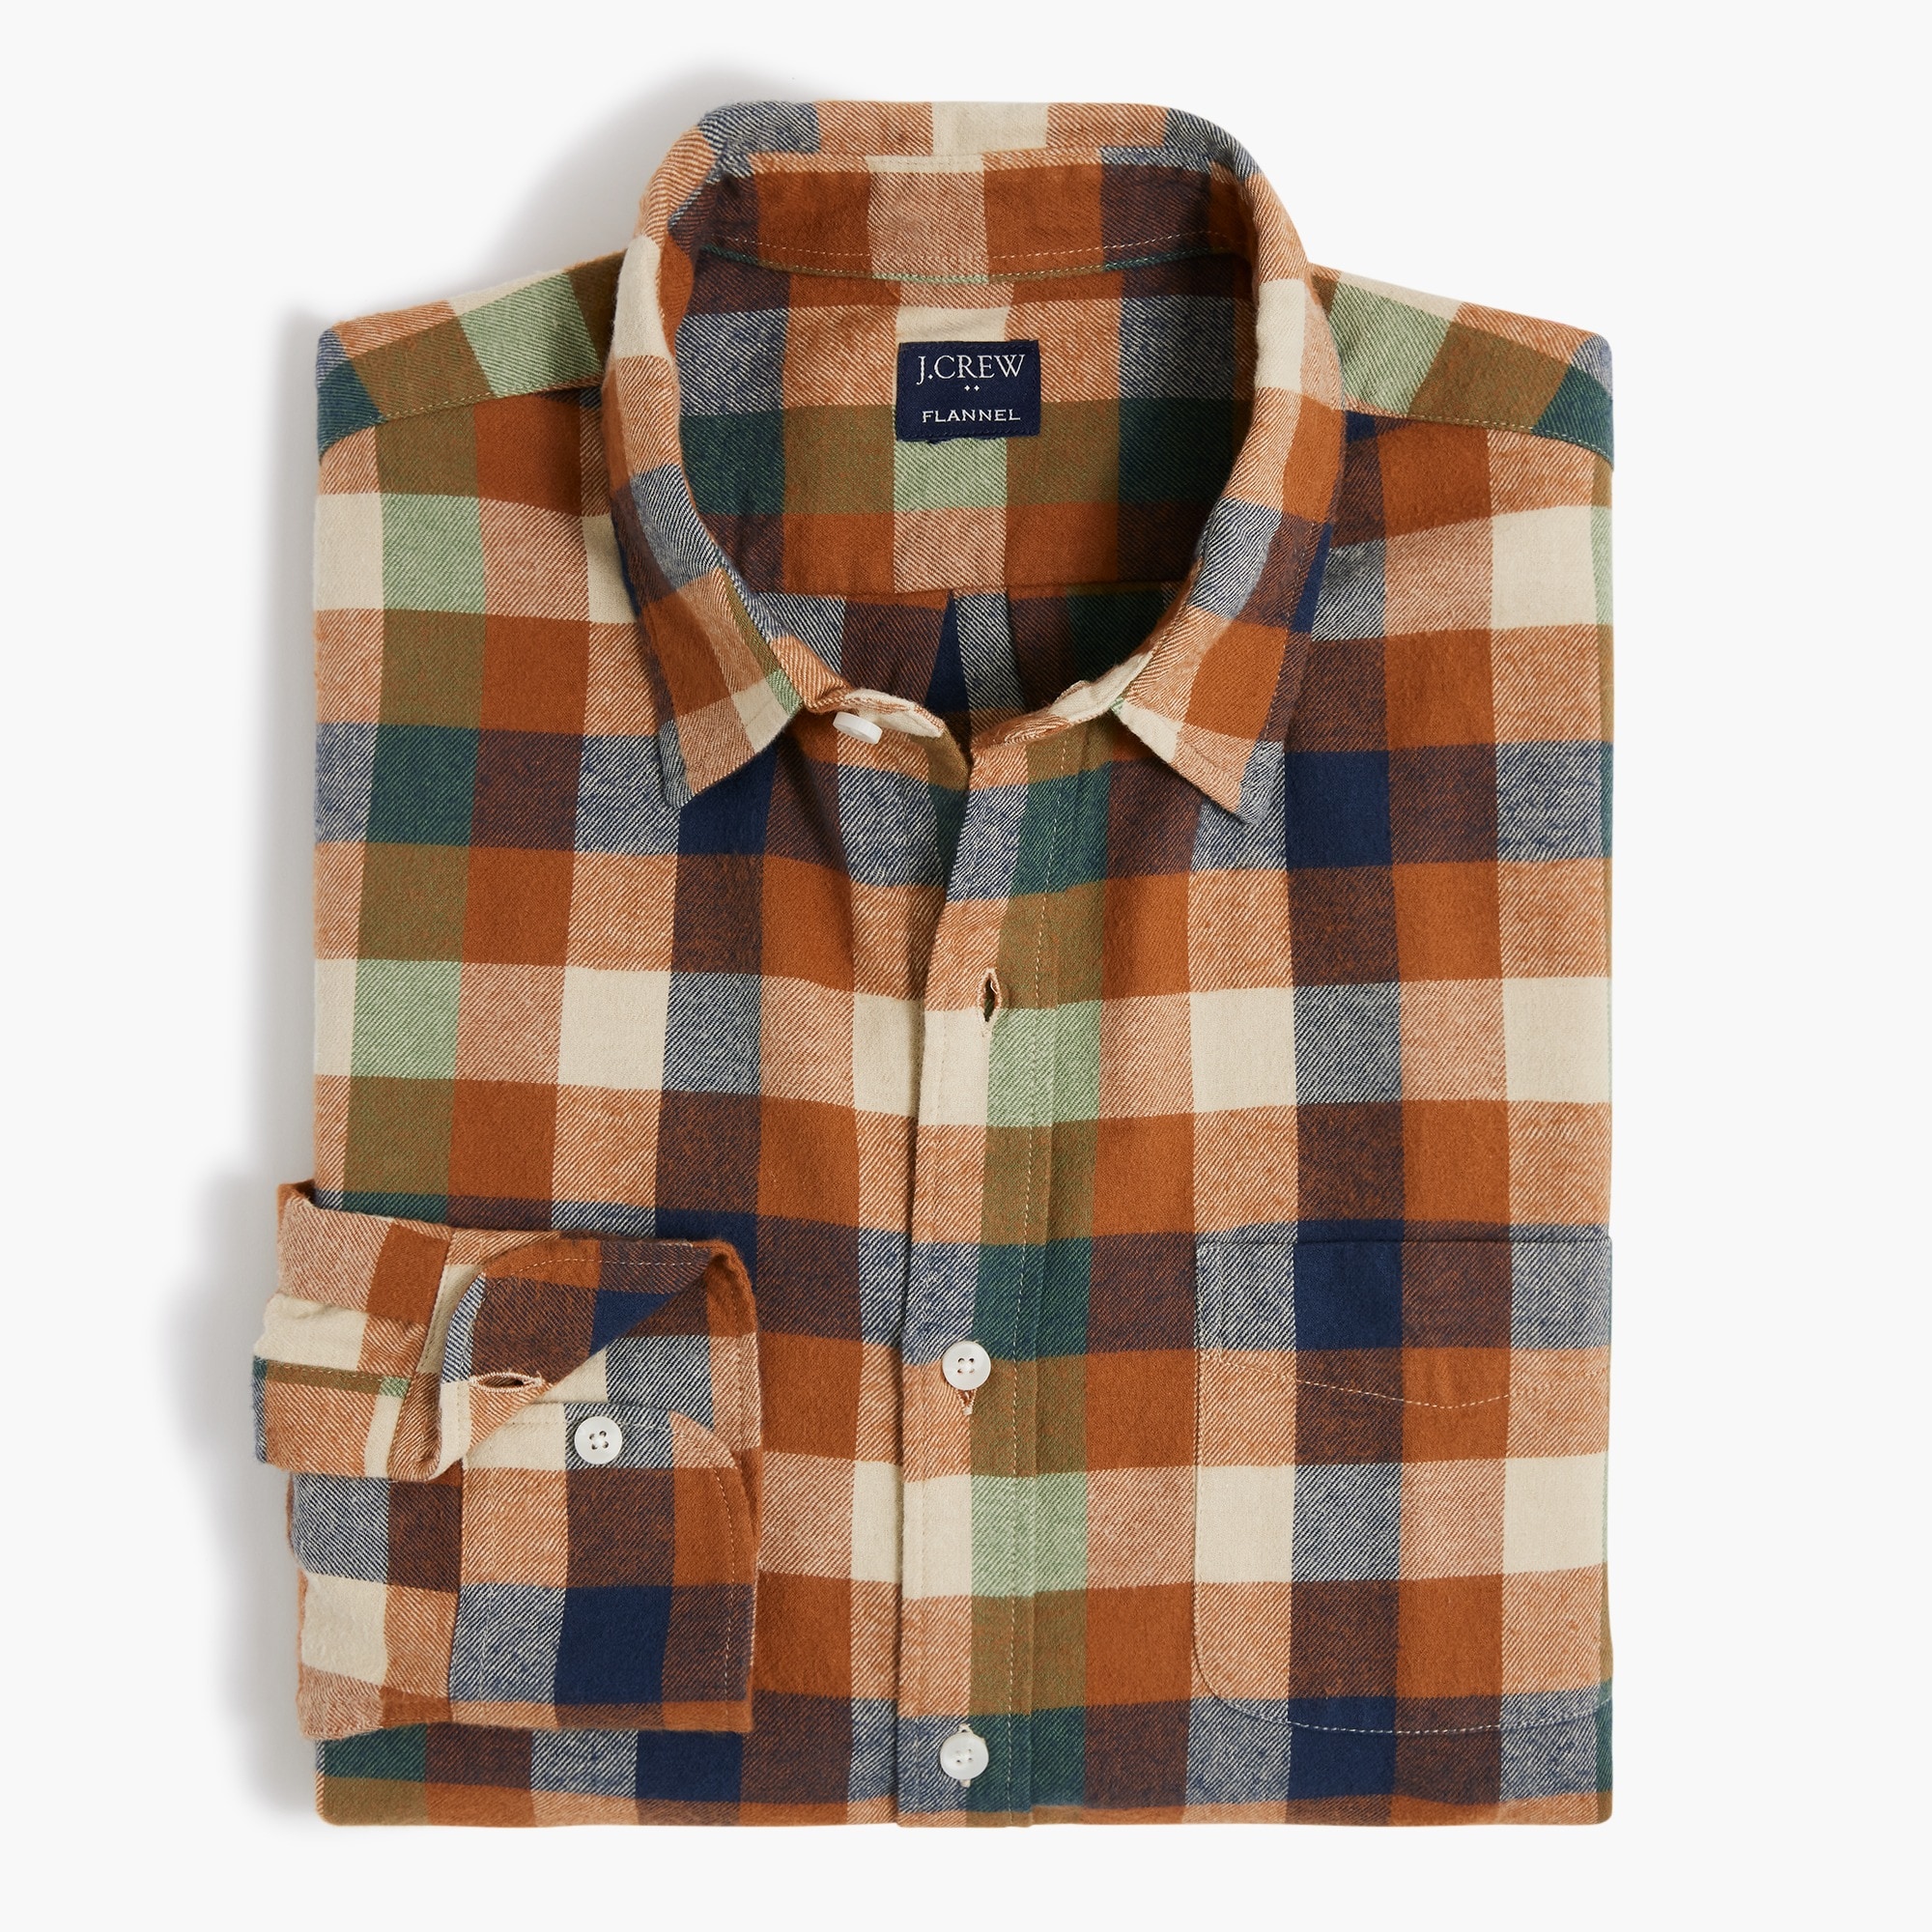 Classic gingham flannel shirt